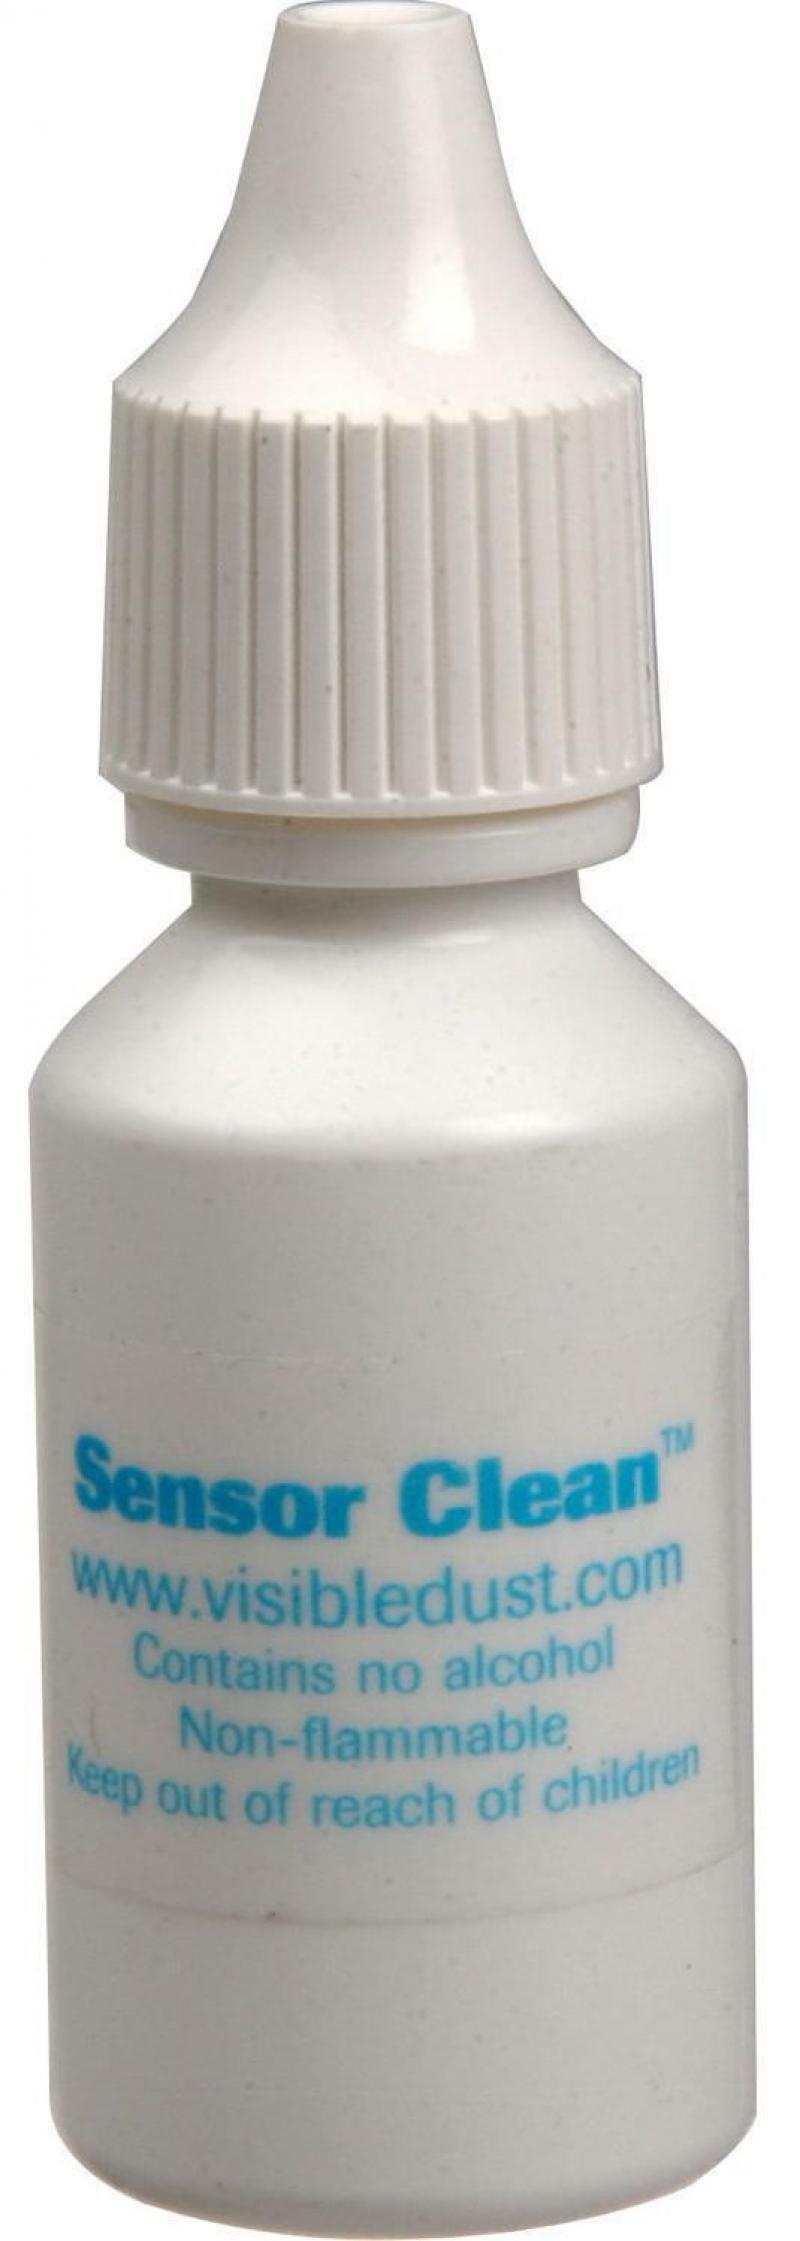 Visible Dust Sensor Clean 16ml,